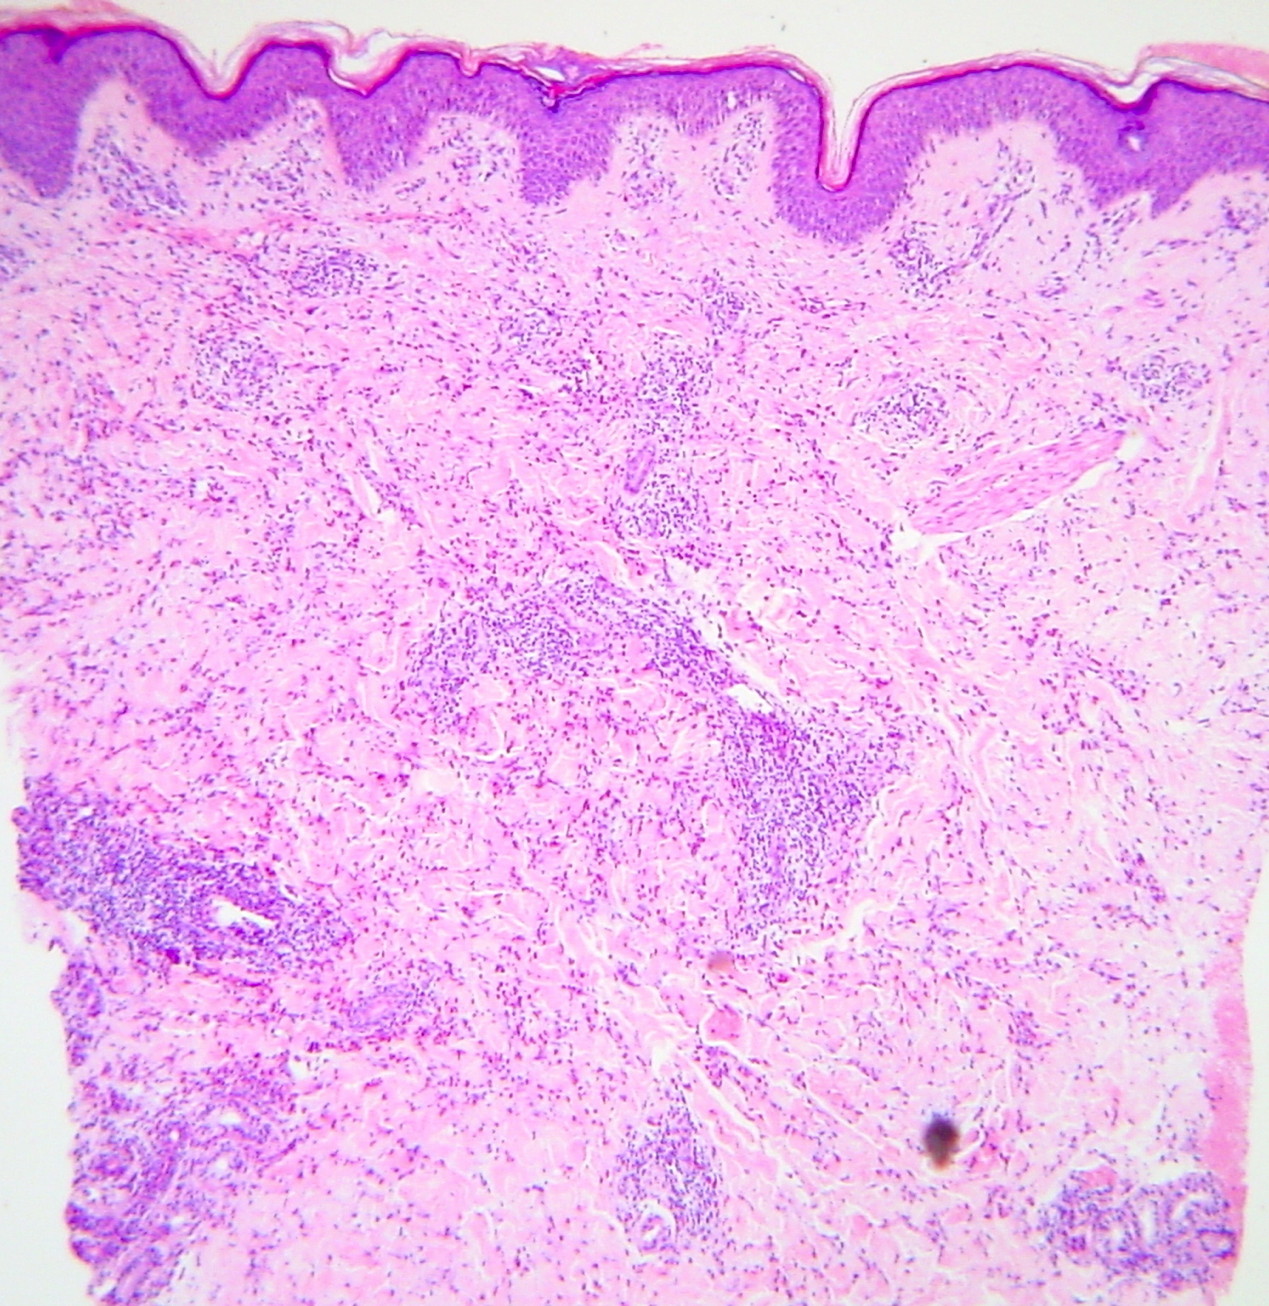 Eosinophilic annular erythema